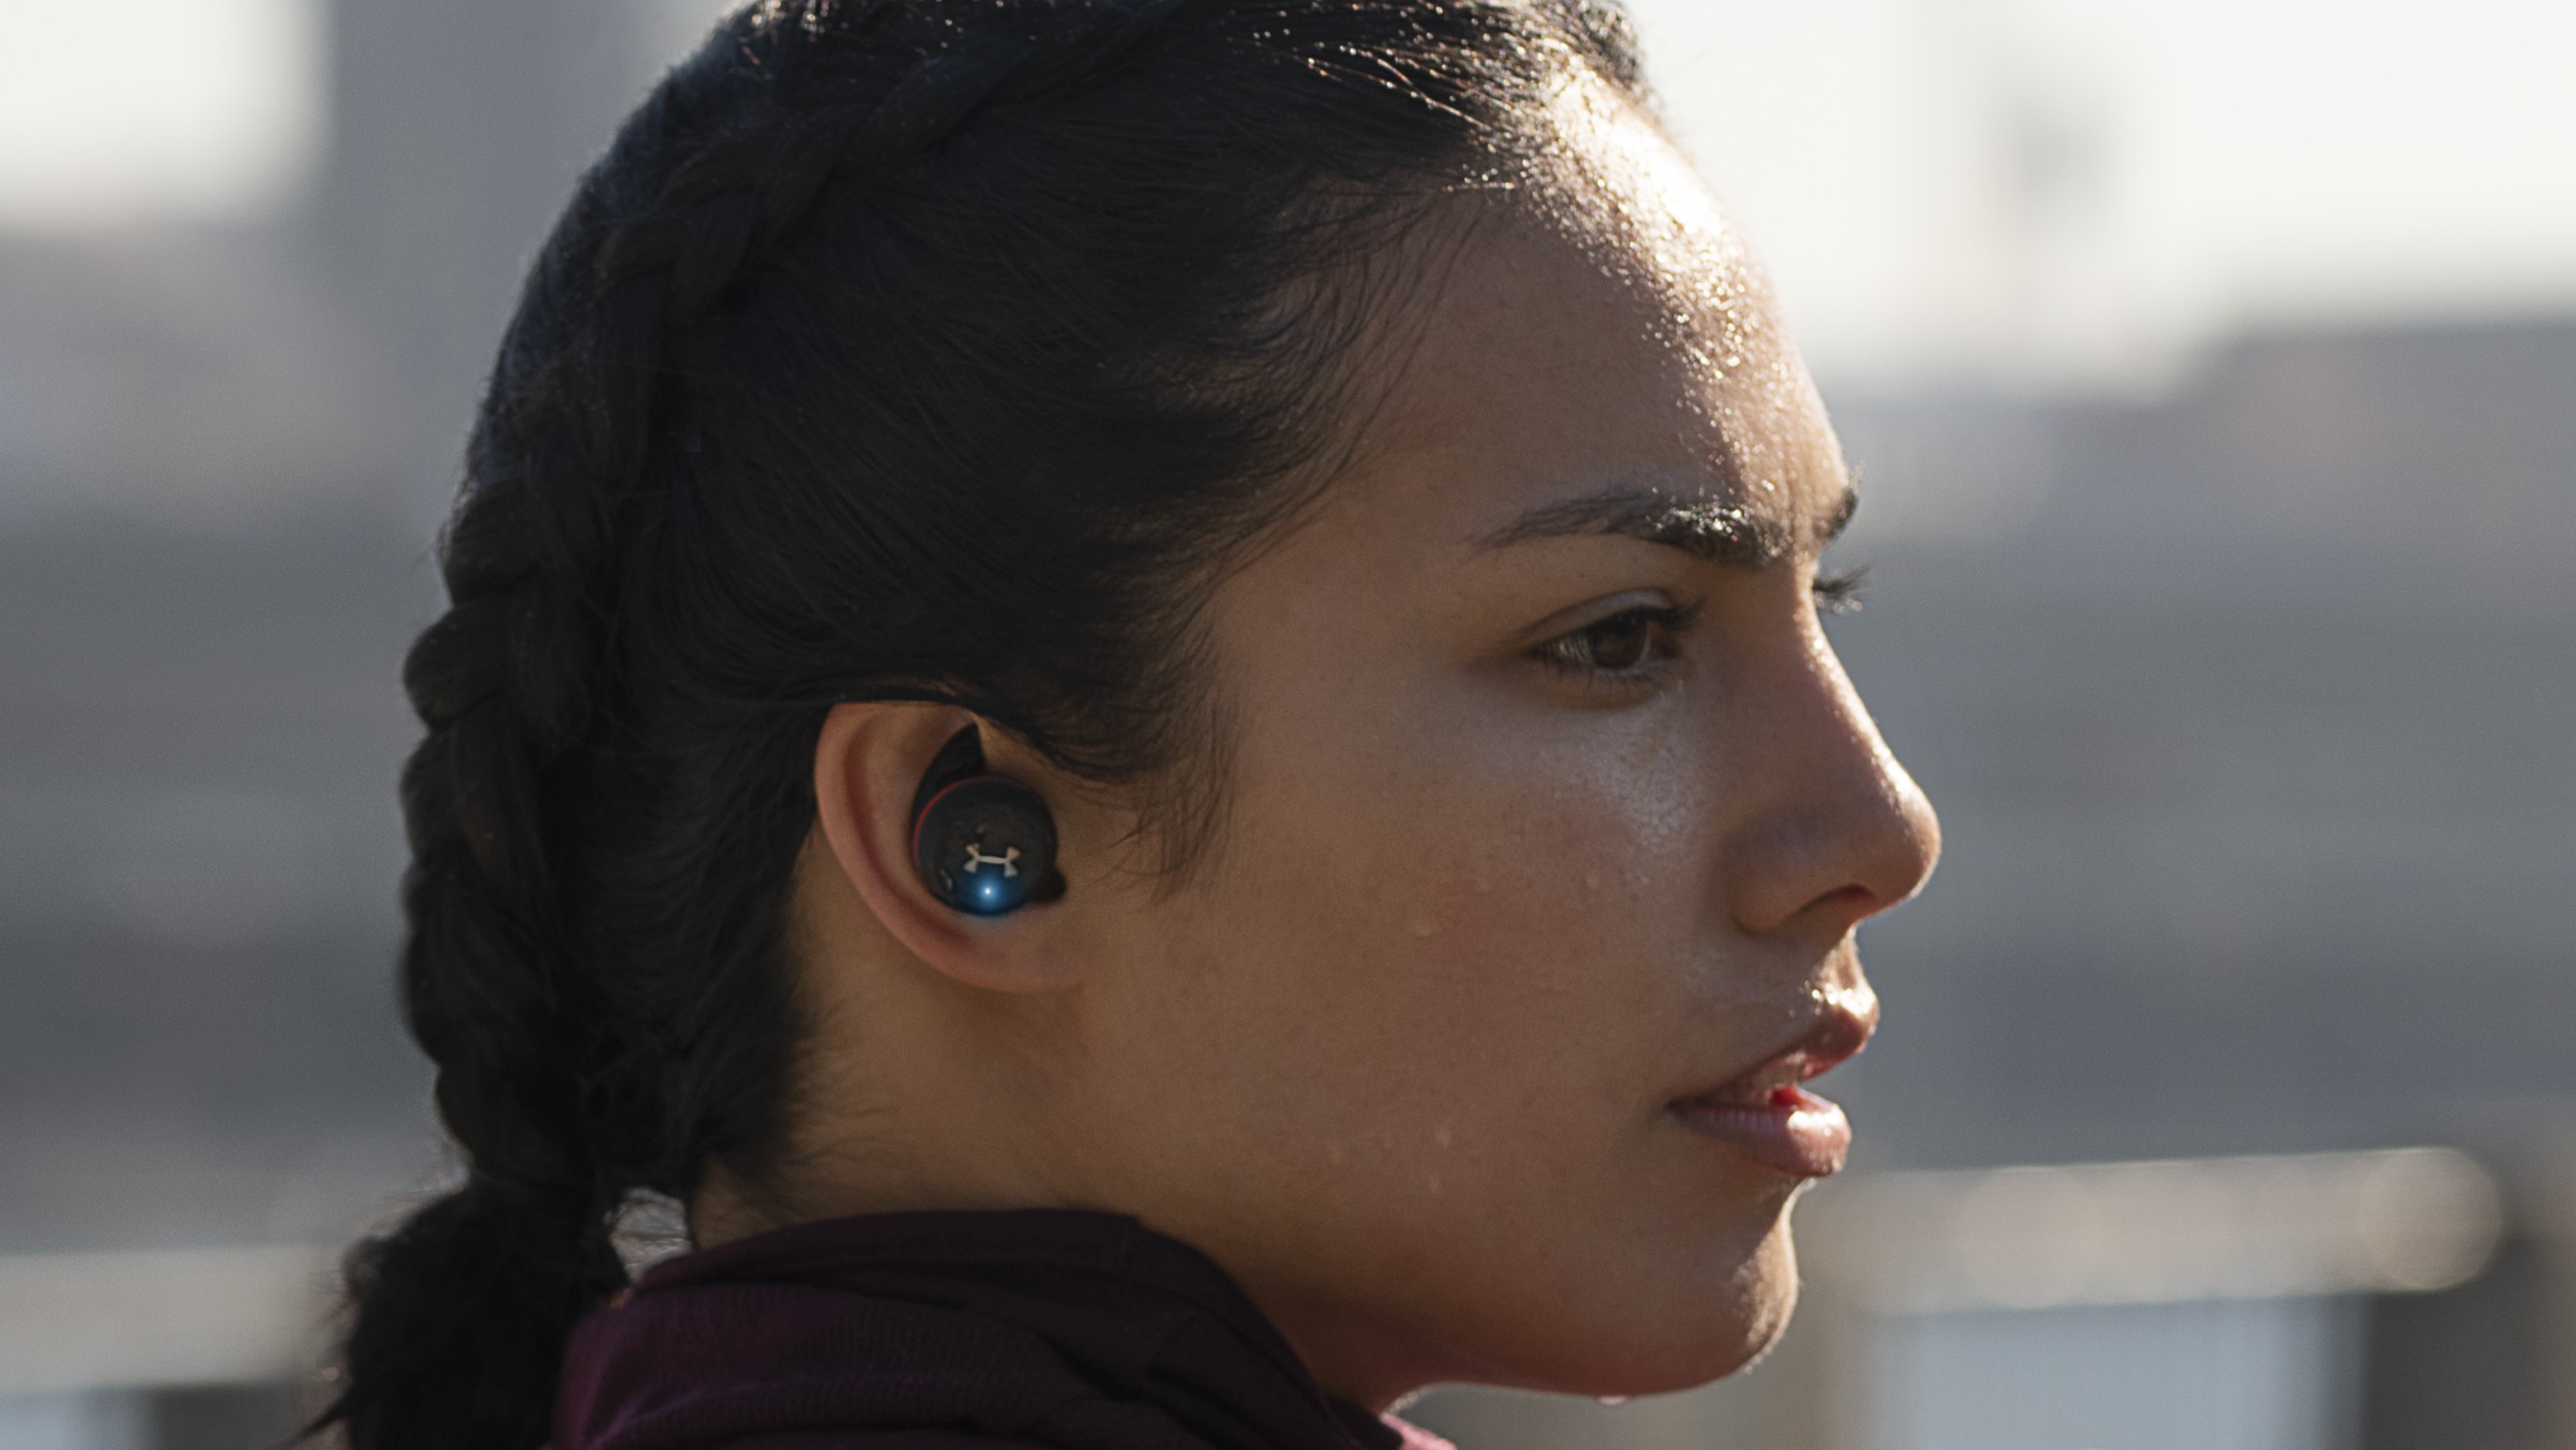 ua true wireless flash project rock edition headphones review